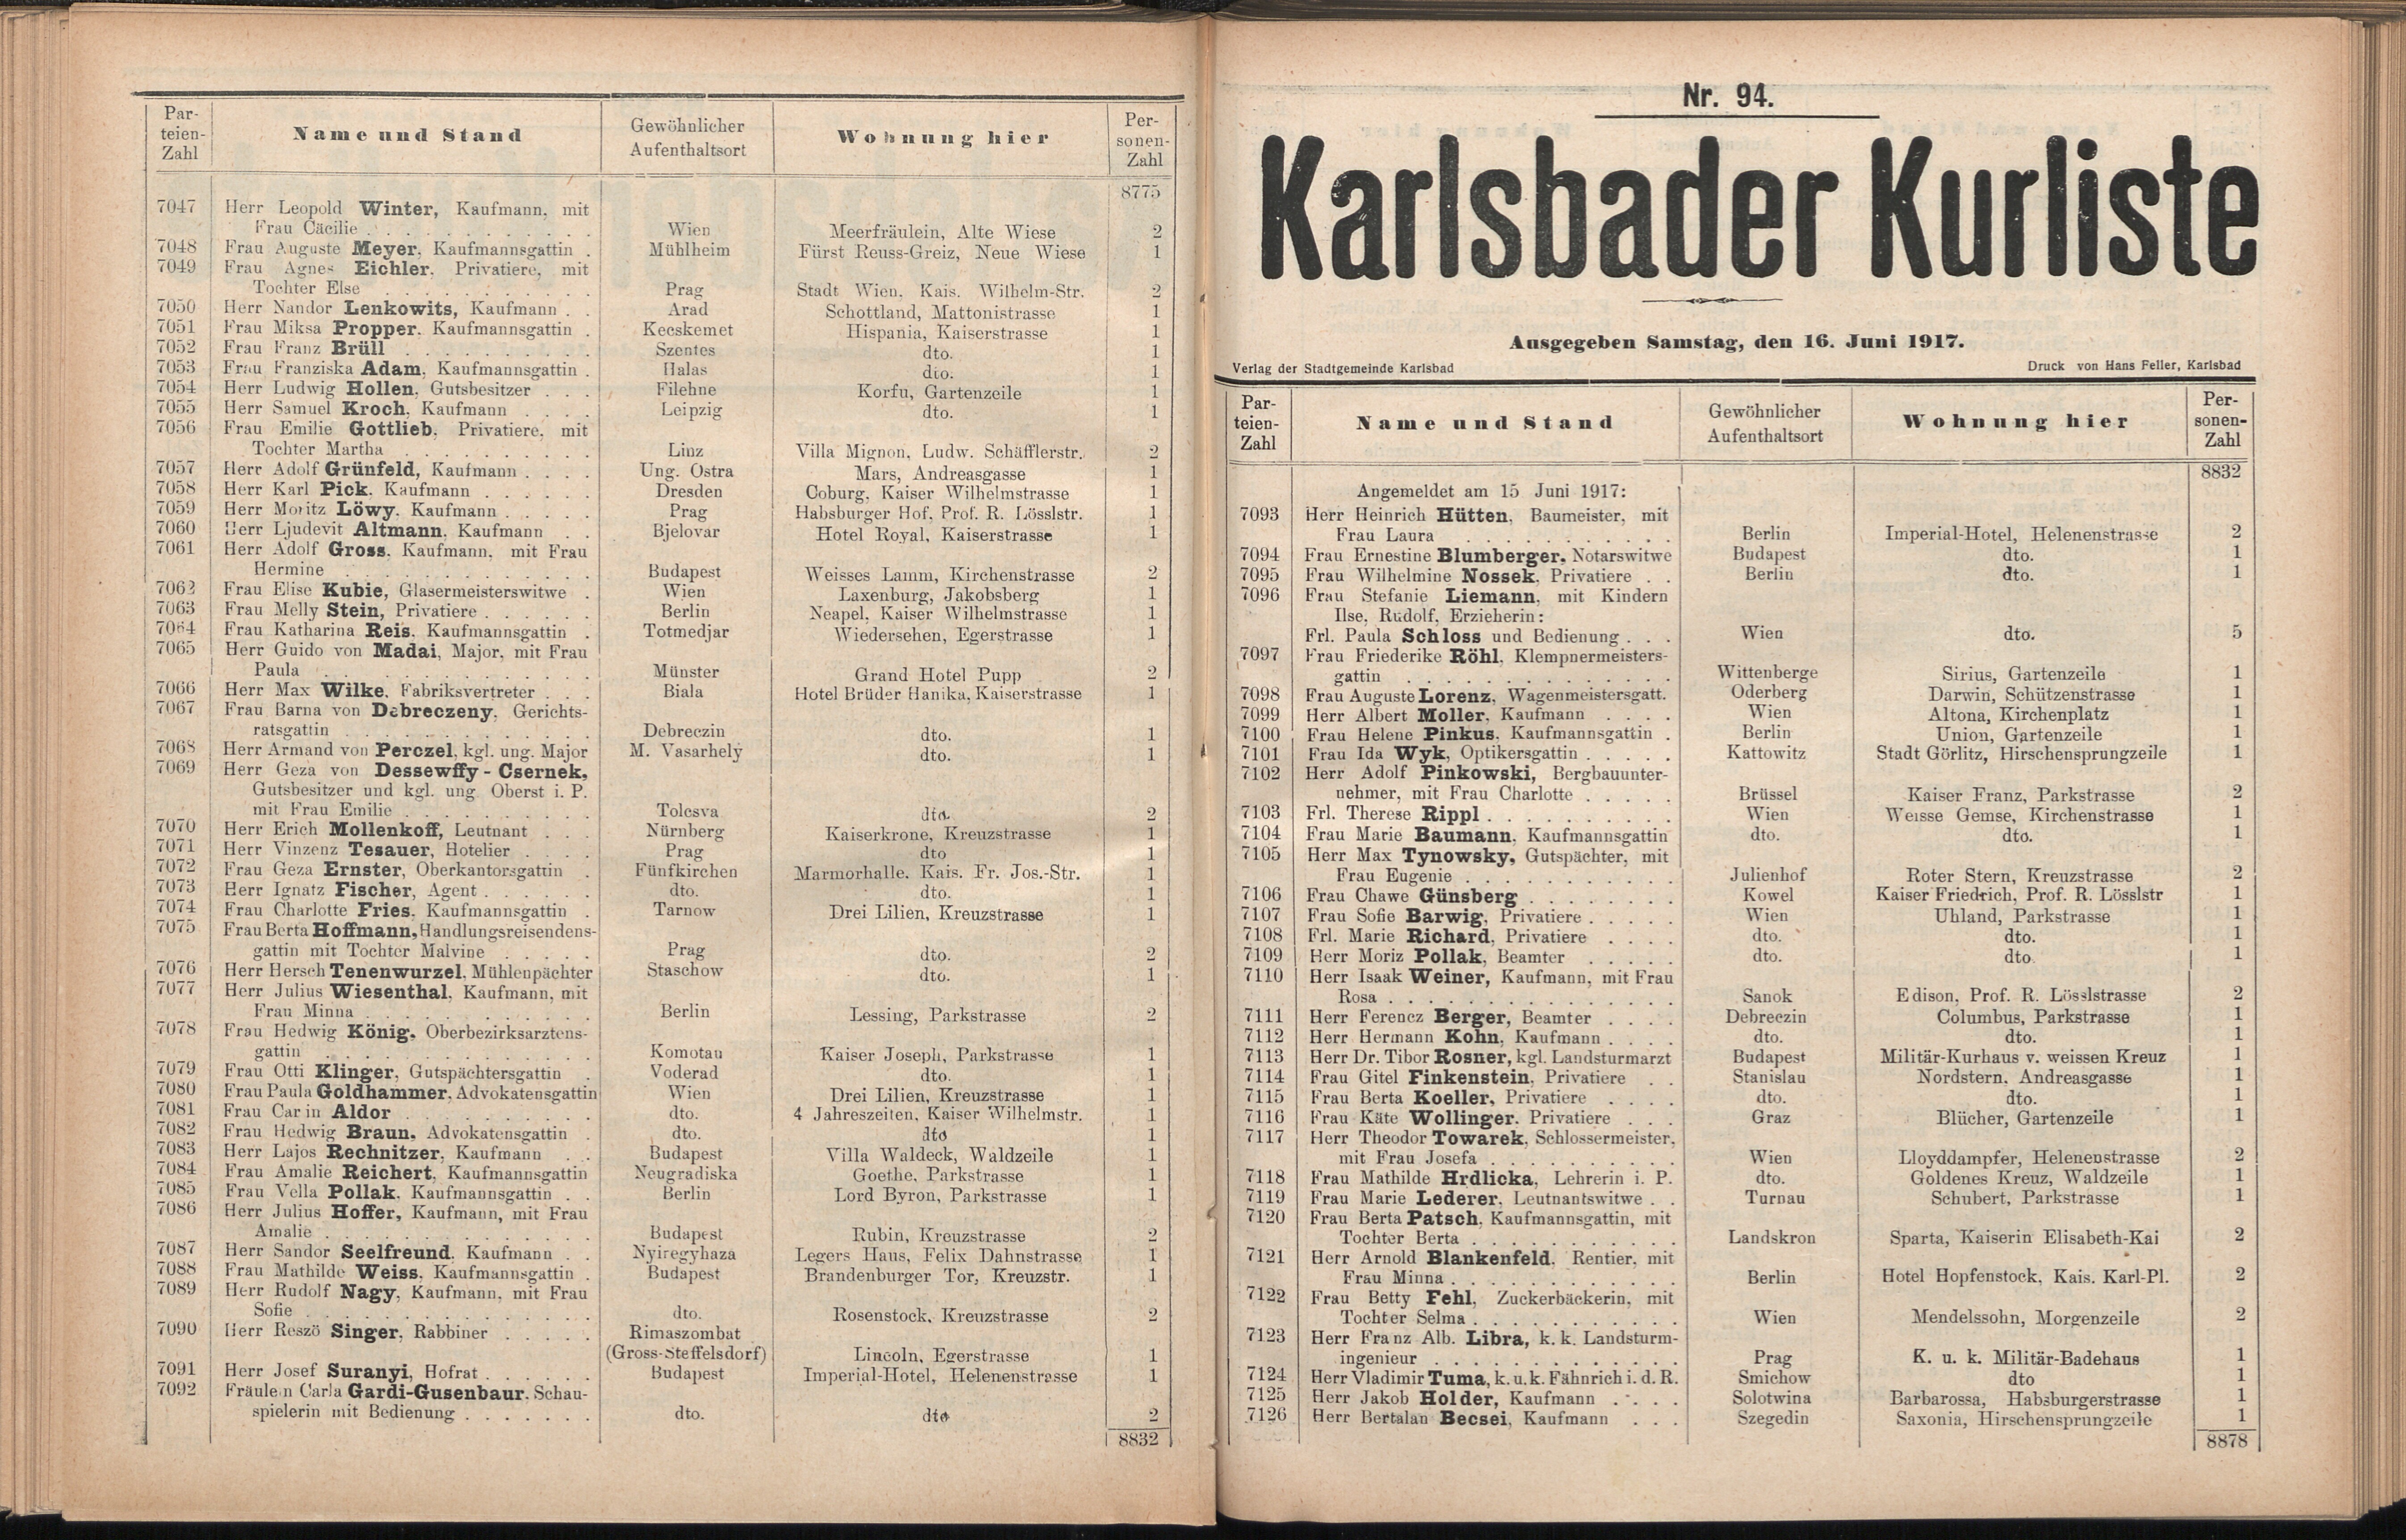 139. soap-kv_knihovna_karlsbader-kurliste-1917_1390